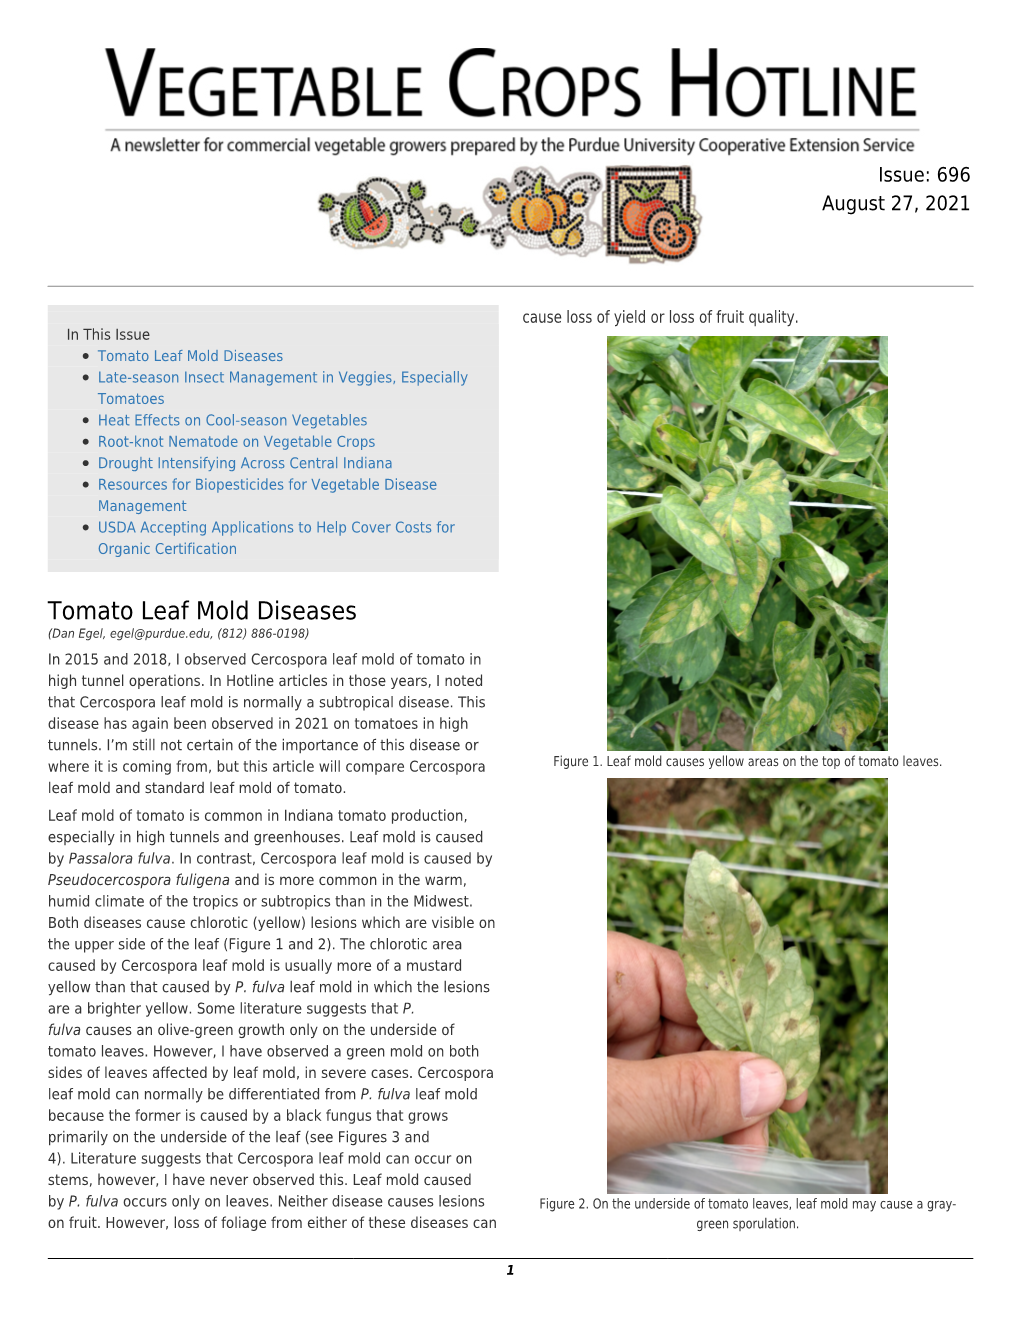 Tomato Leaf Mold Diseases